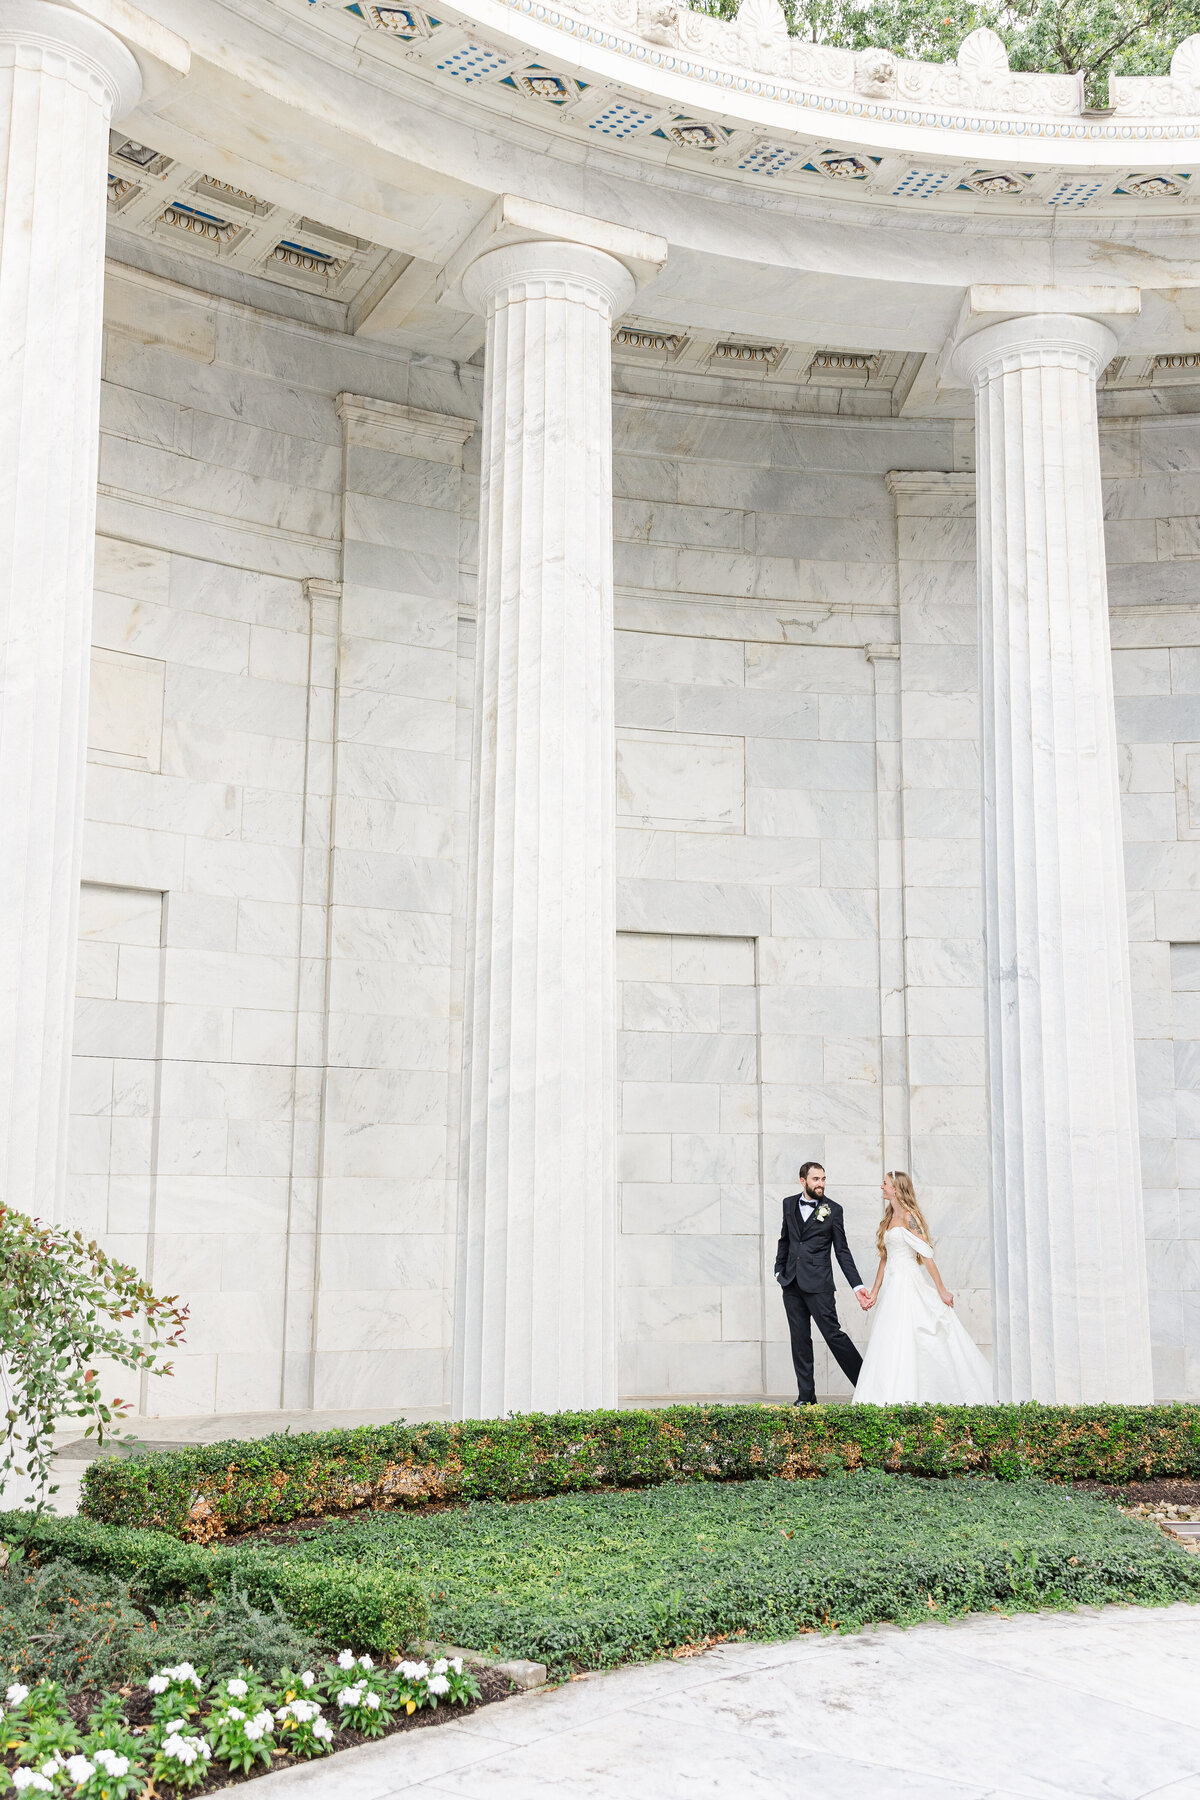 Bride & Groom walking hand in hand McKinley Memorial Museum Wedding Niles OH